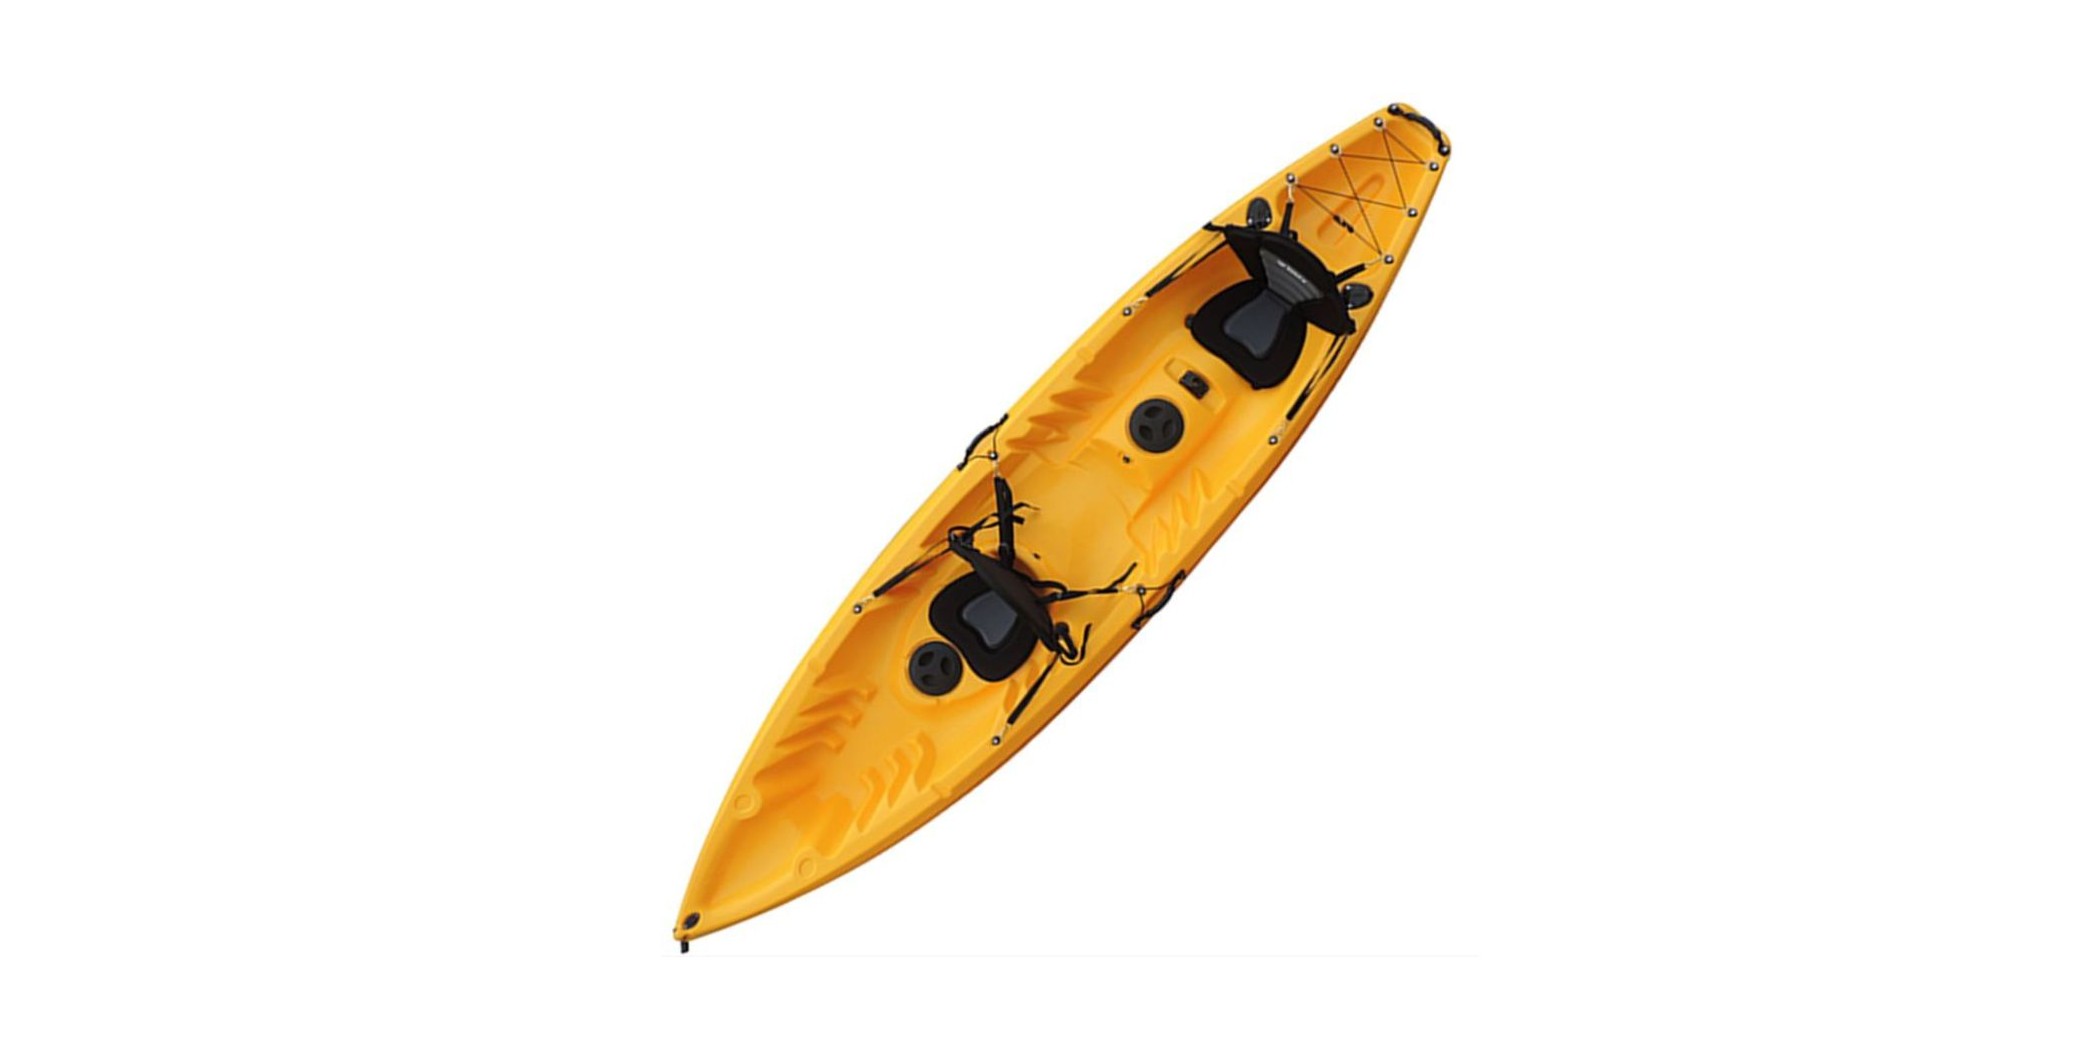 Kayak Nereus 2 (Double seater) - Yellow